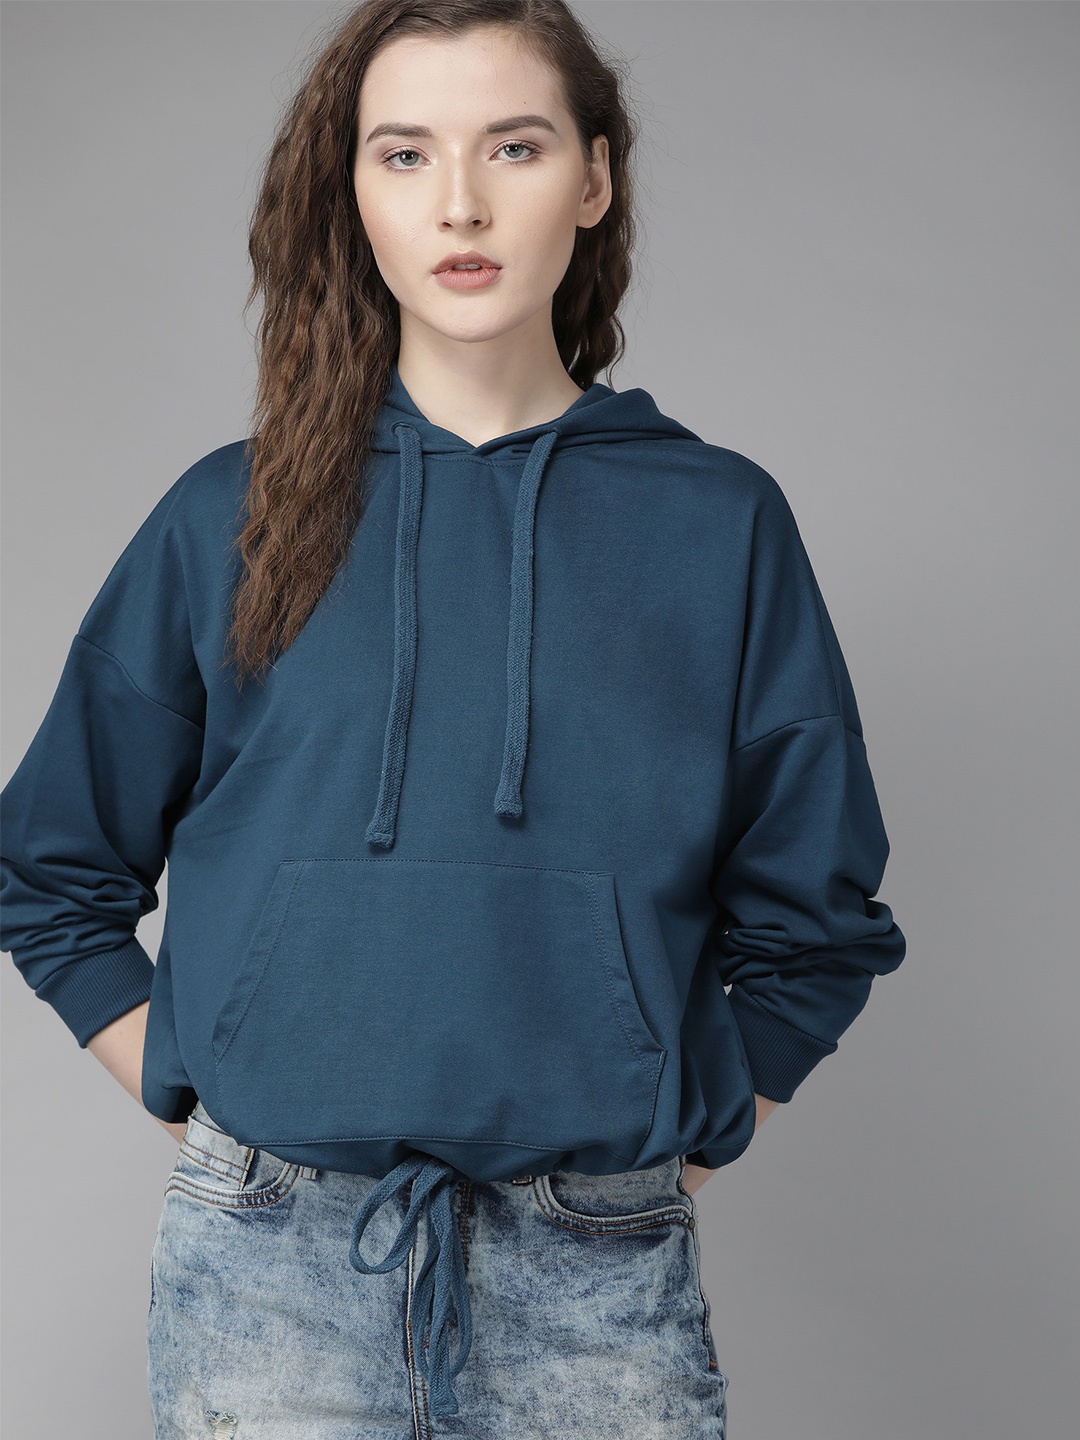 

Roadster Women Teal Blue Solid Hooded Sweatshirt